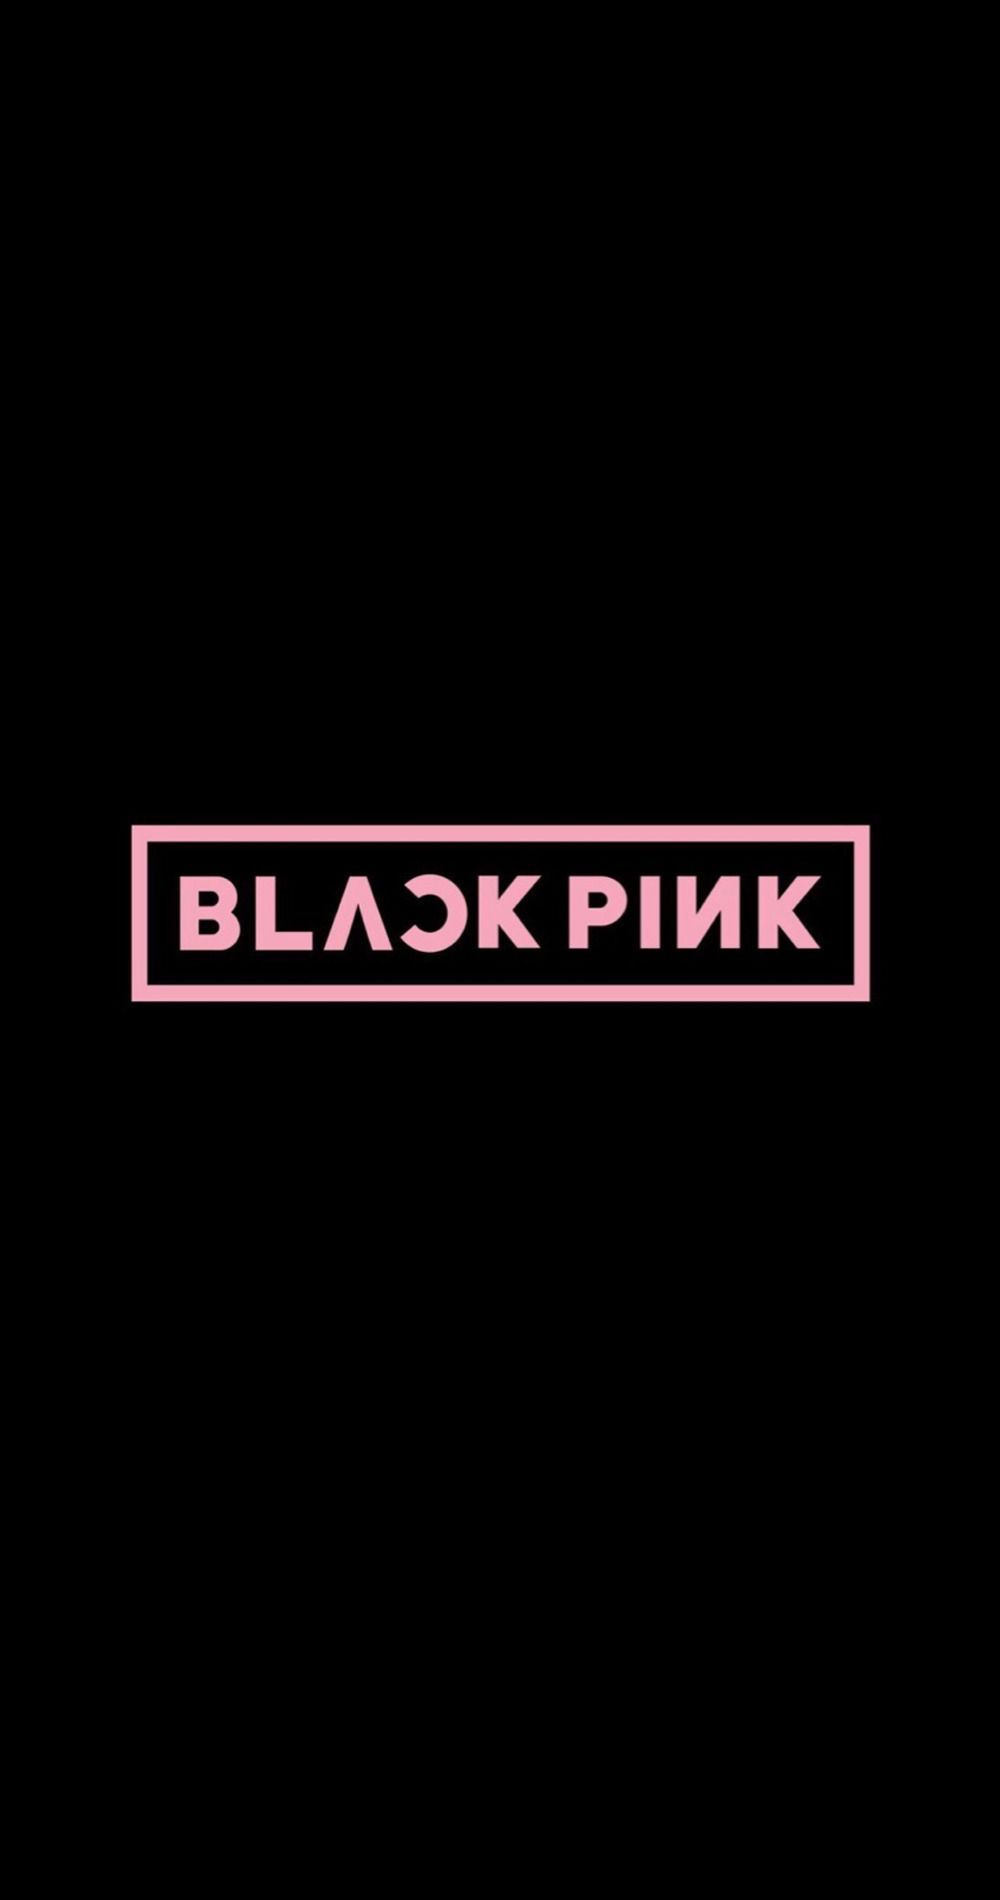 BLACKPINK logo wallpaper! Please like or reblog if you use them! Please do not repost!. Blackpink, Lisa blackpink wallpaper, Black pink kpop